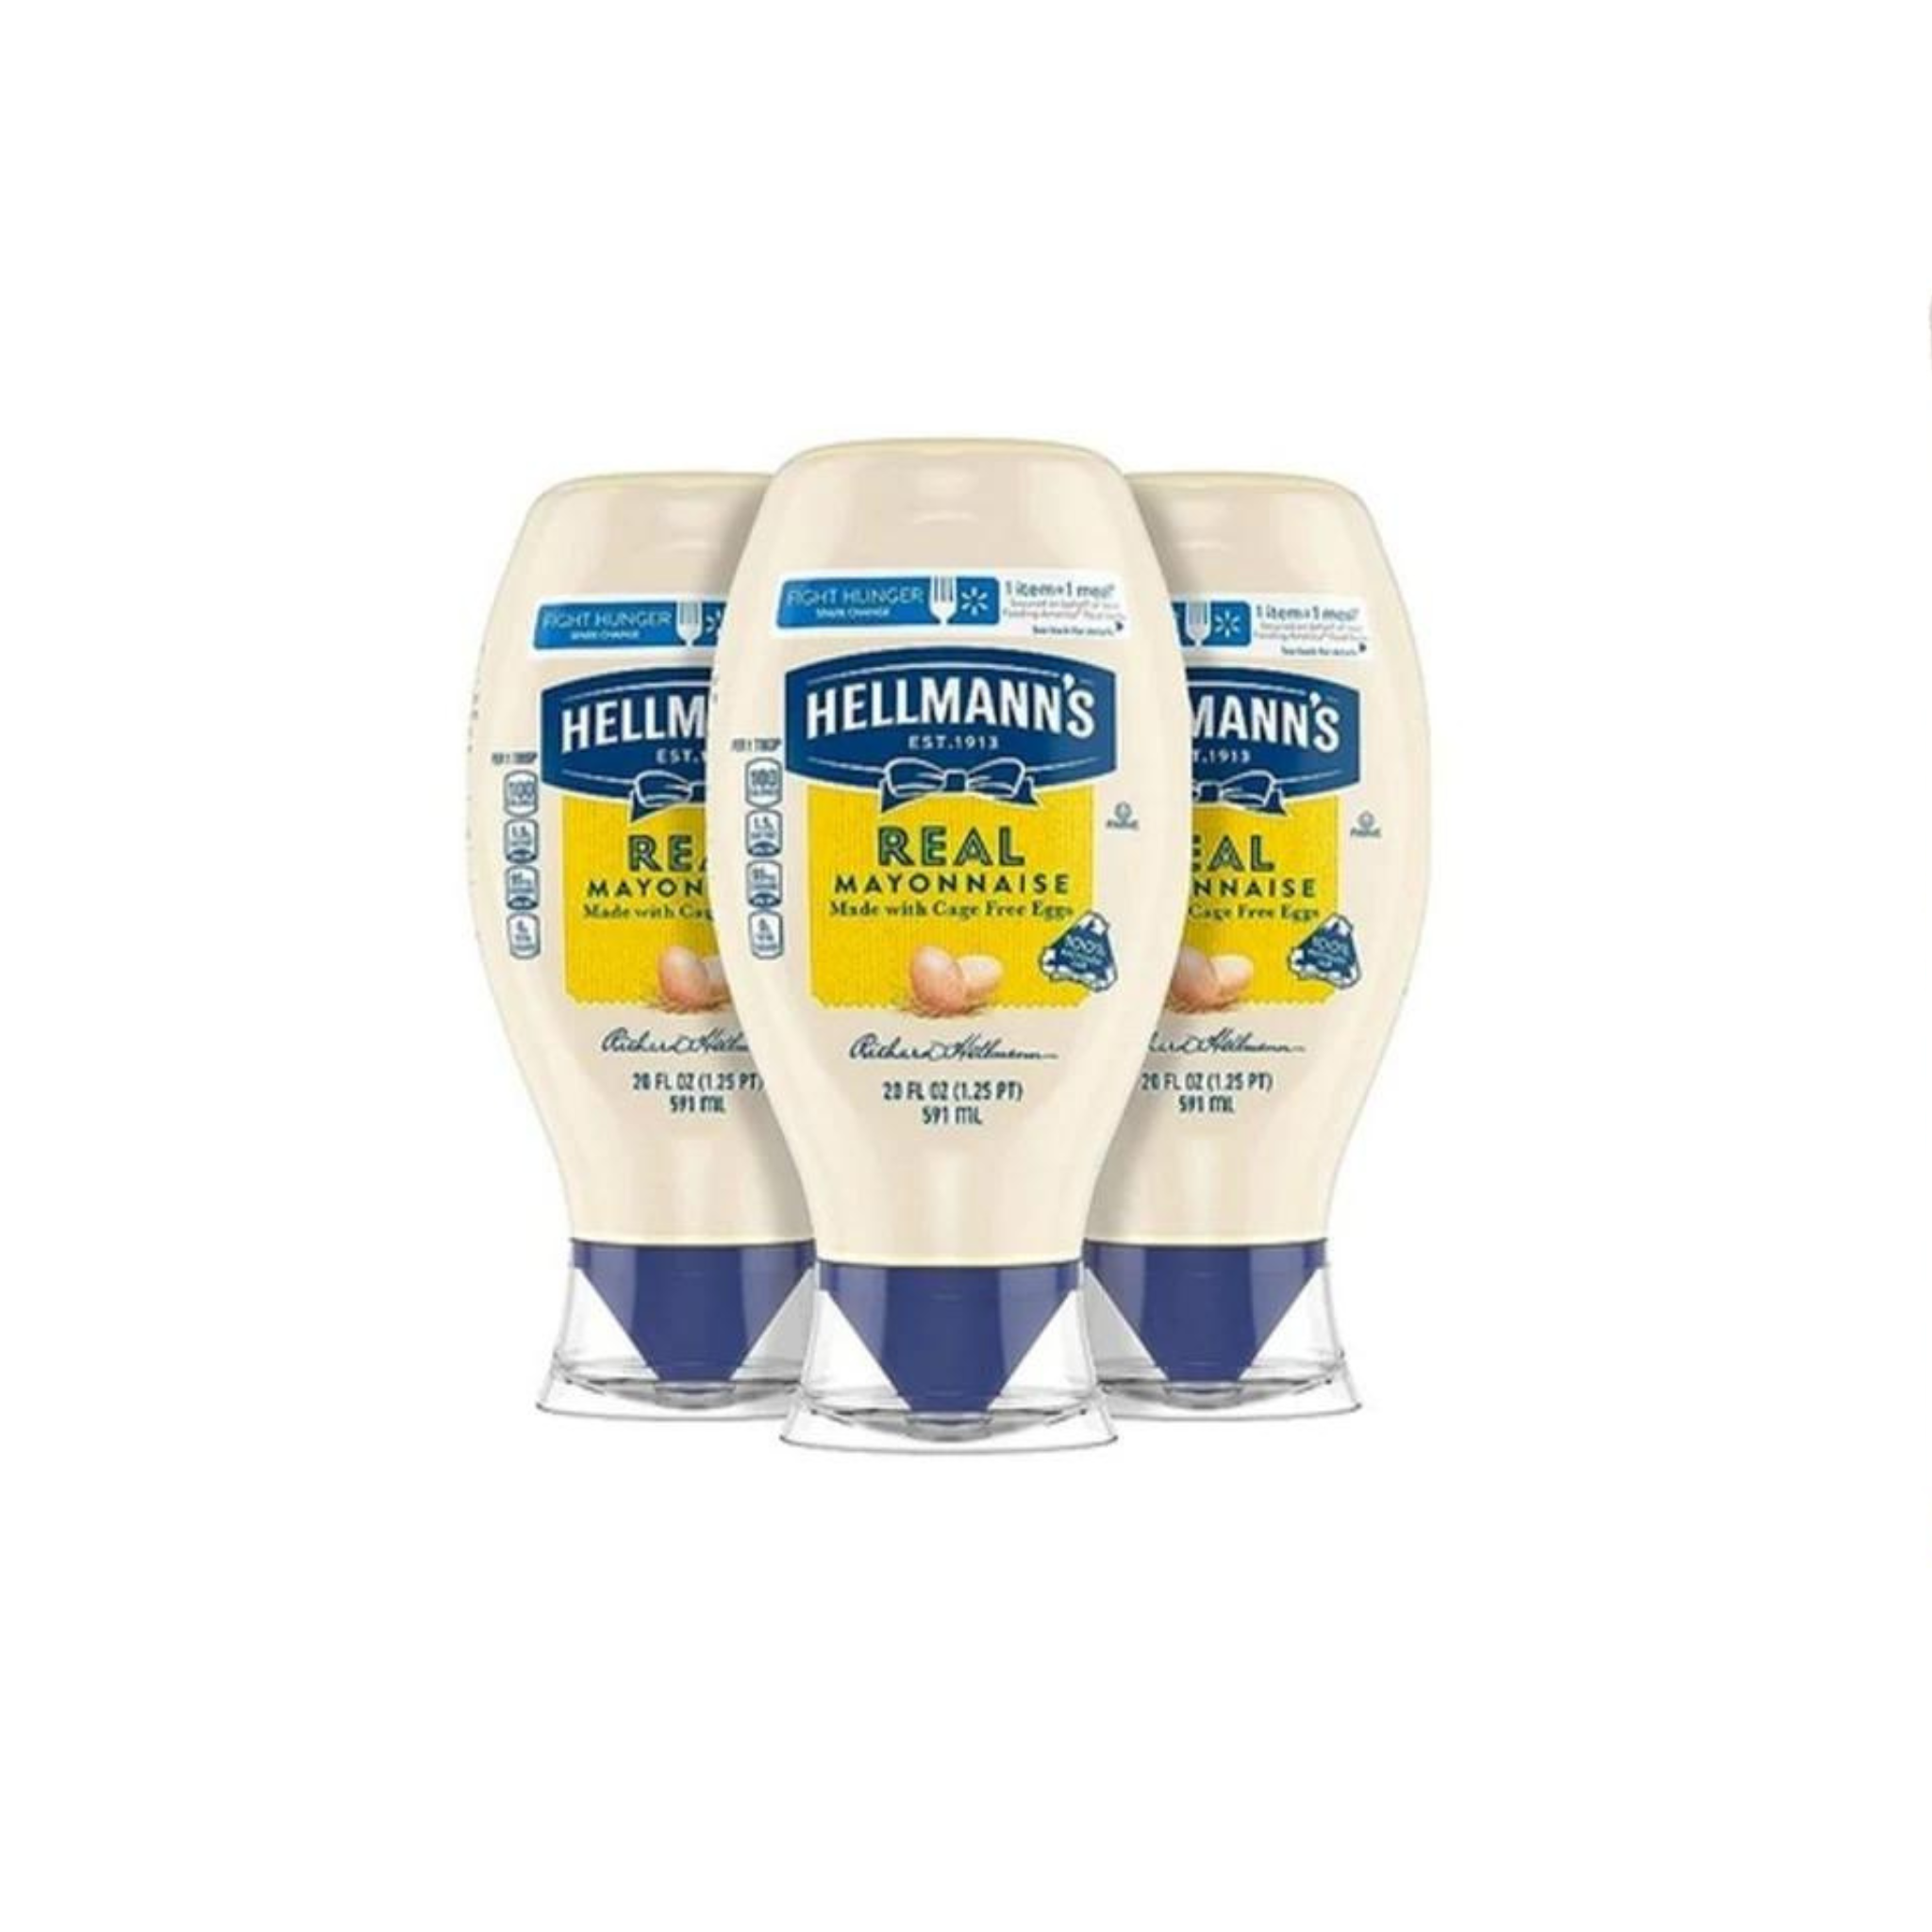 Botella exprimible de mayonesa Hellmann's de 3 unidades